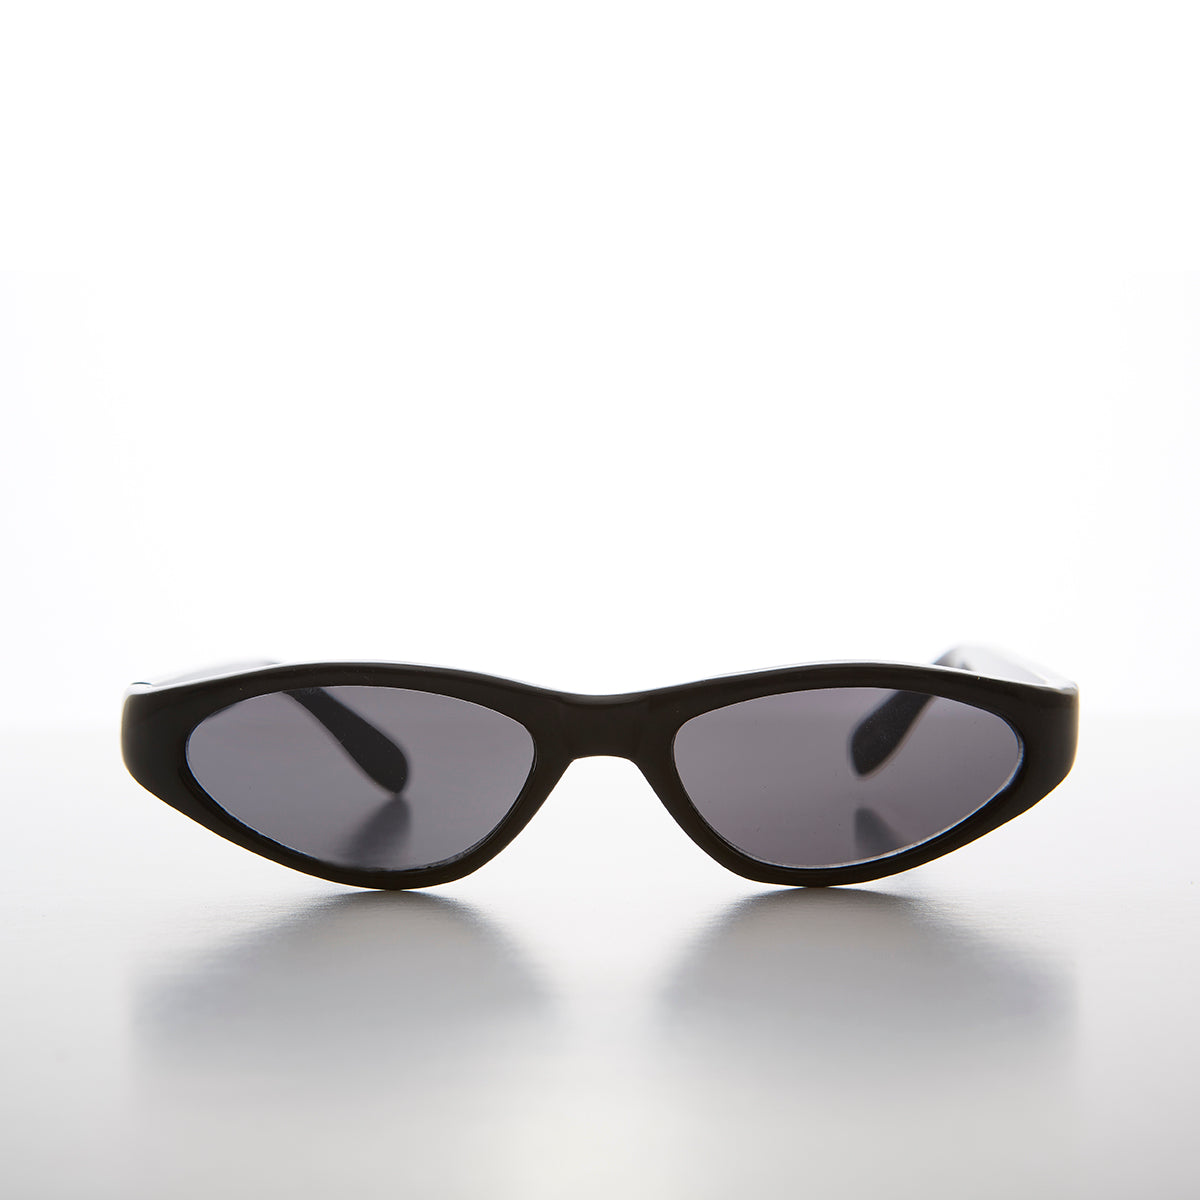 Sunglasses KISS® - CAT EYE mod. BUTTERFLY - fashion woman EXTRAORDINARY  vintage rockabilly